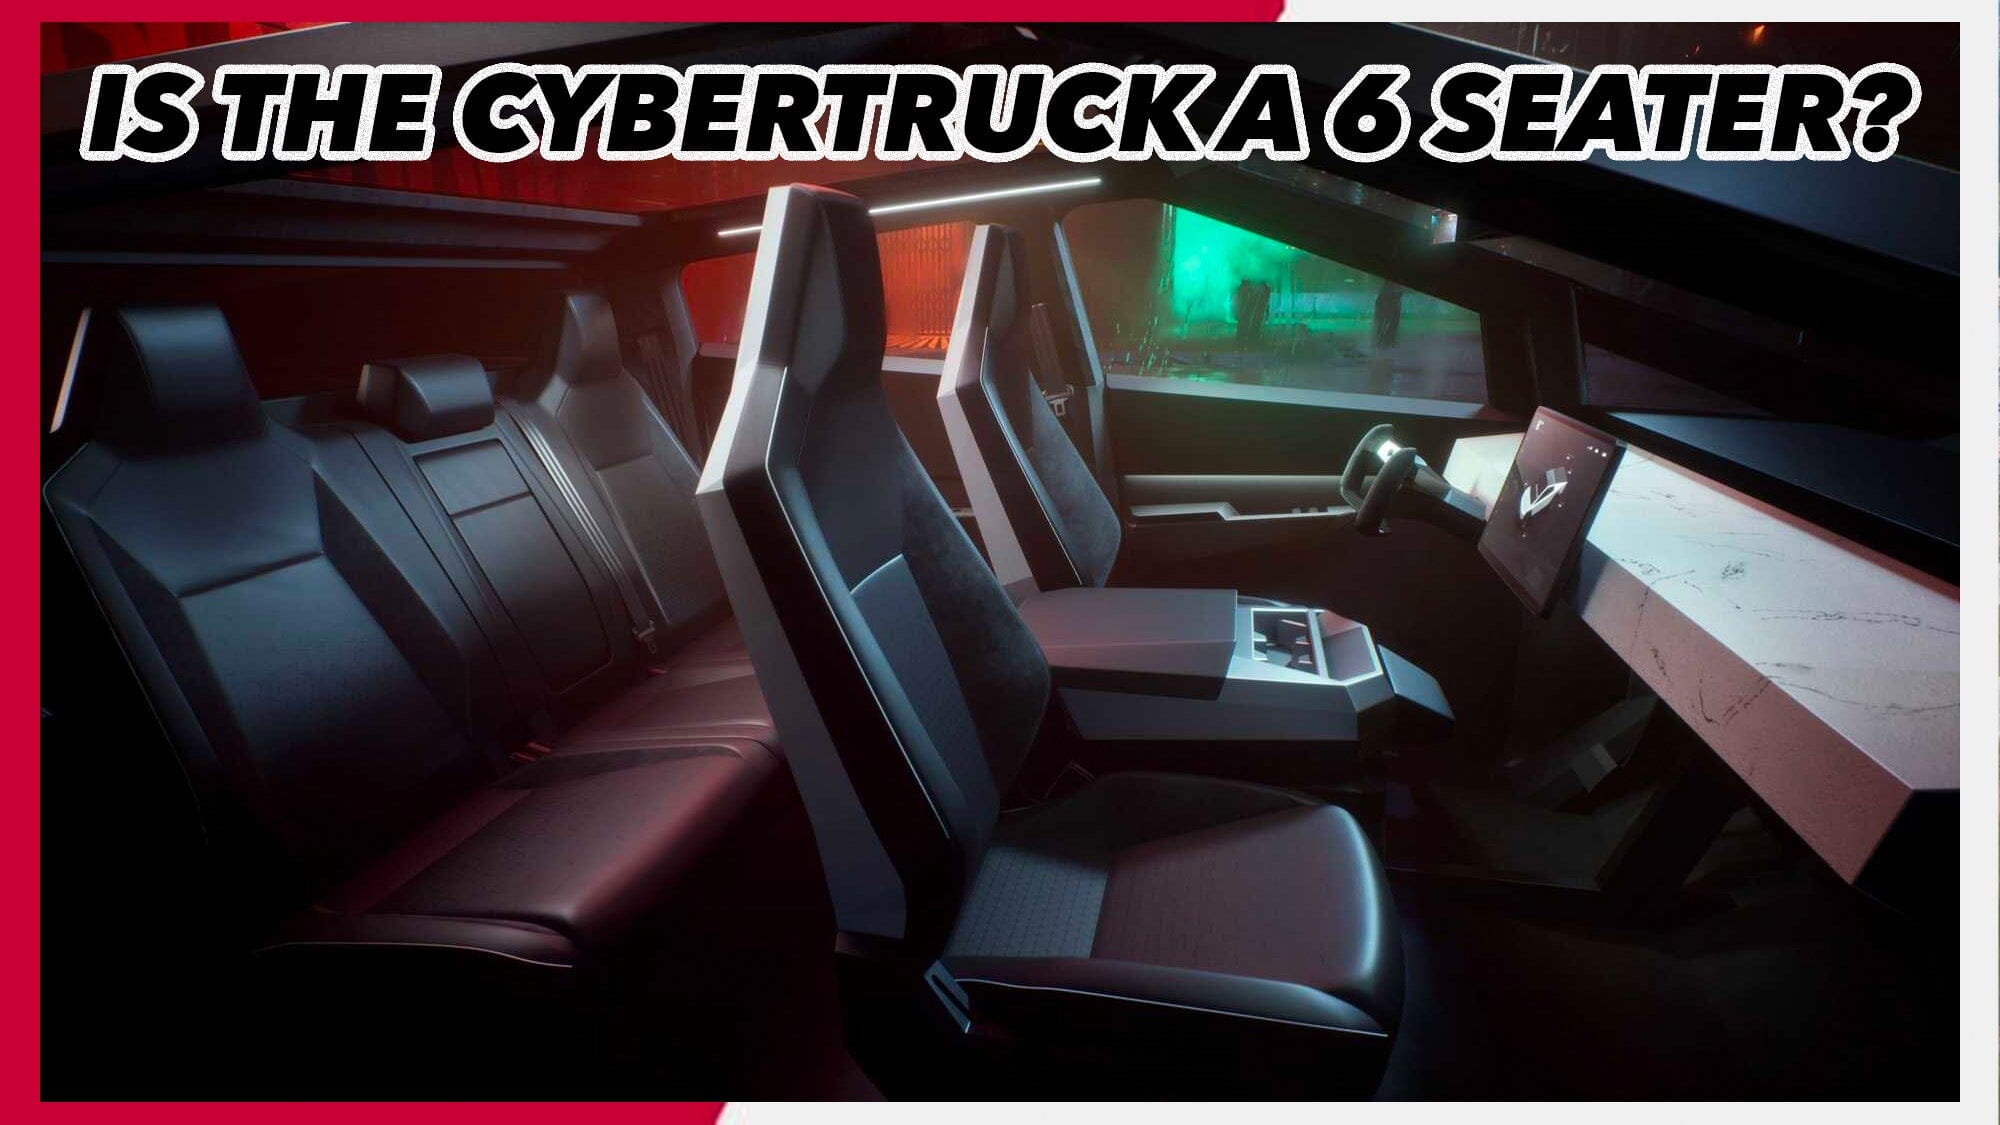 Is Cybertruck a 6 seater?